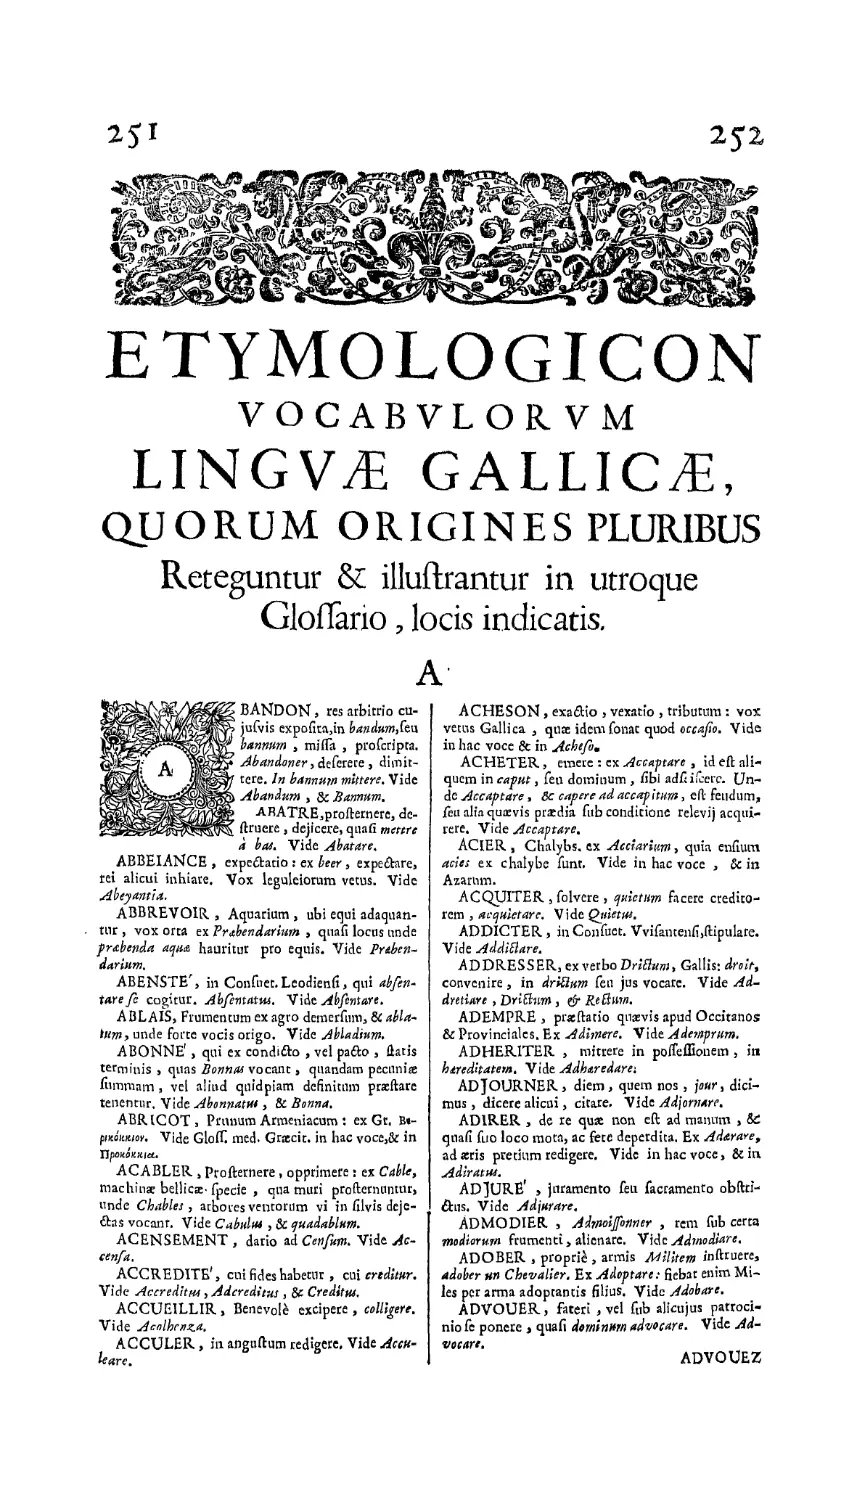 Etymologicon vocabvlorvm lingvae gallicae
Etymologicon vocabulorum lingvae gallicae